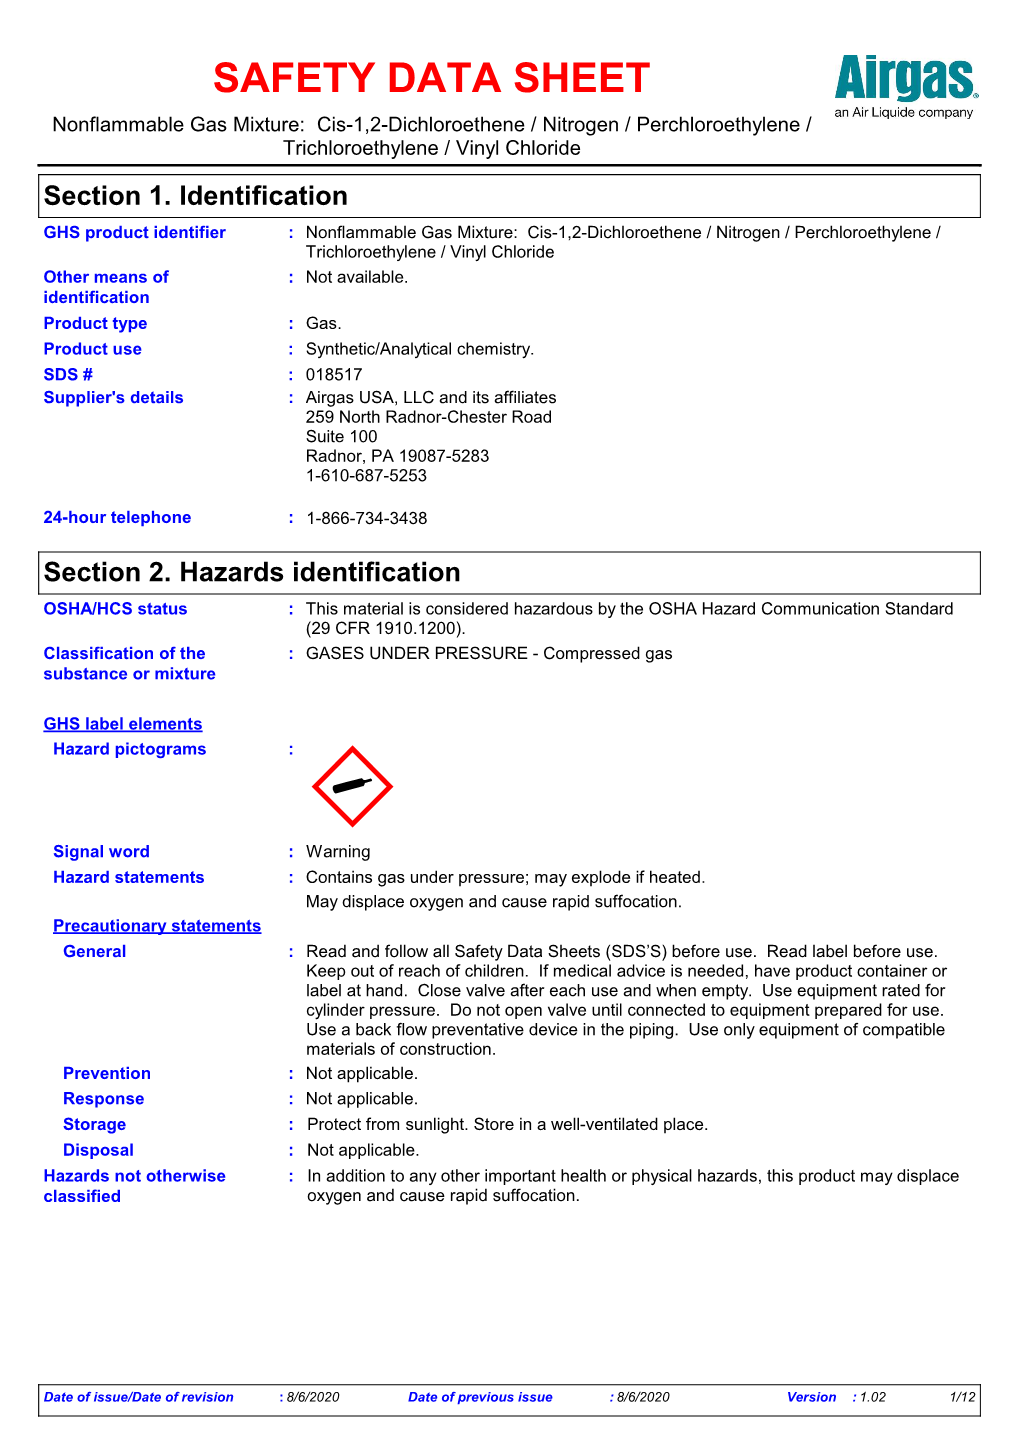 SAFETY DATA SHEET Nonflammable Gas Mixture: Cis-1,2-Dichloroethene / Nitrogen / Perchloroethylene / Trichloroethylene / Vinyl Chloride Section 1